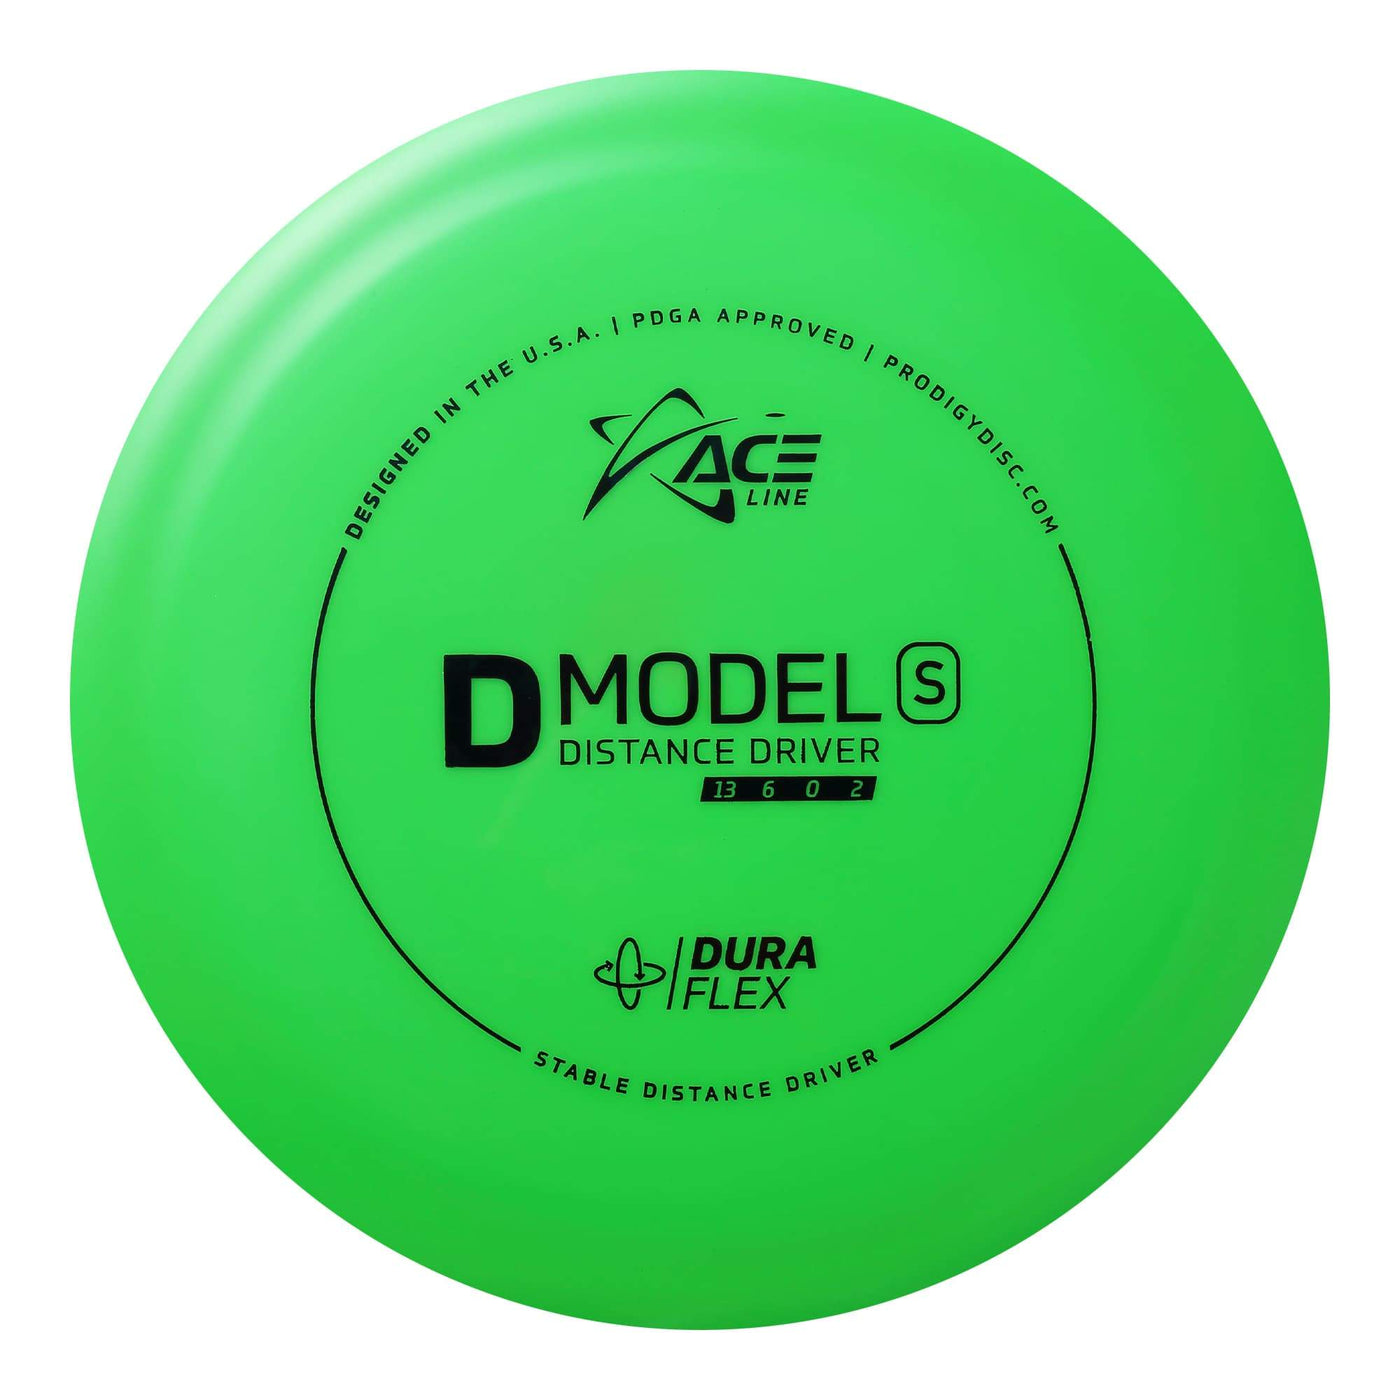 Prodigy Ace Line DuraFlex D Model S Distance Driver - Speed 13